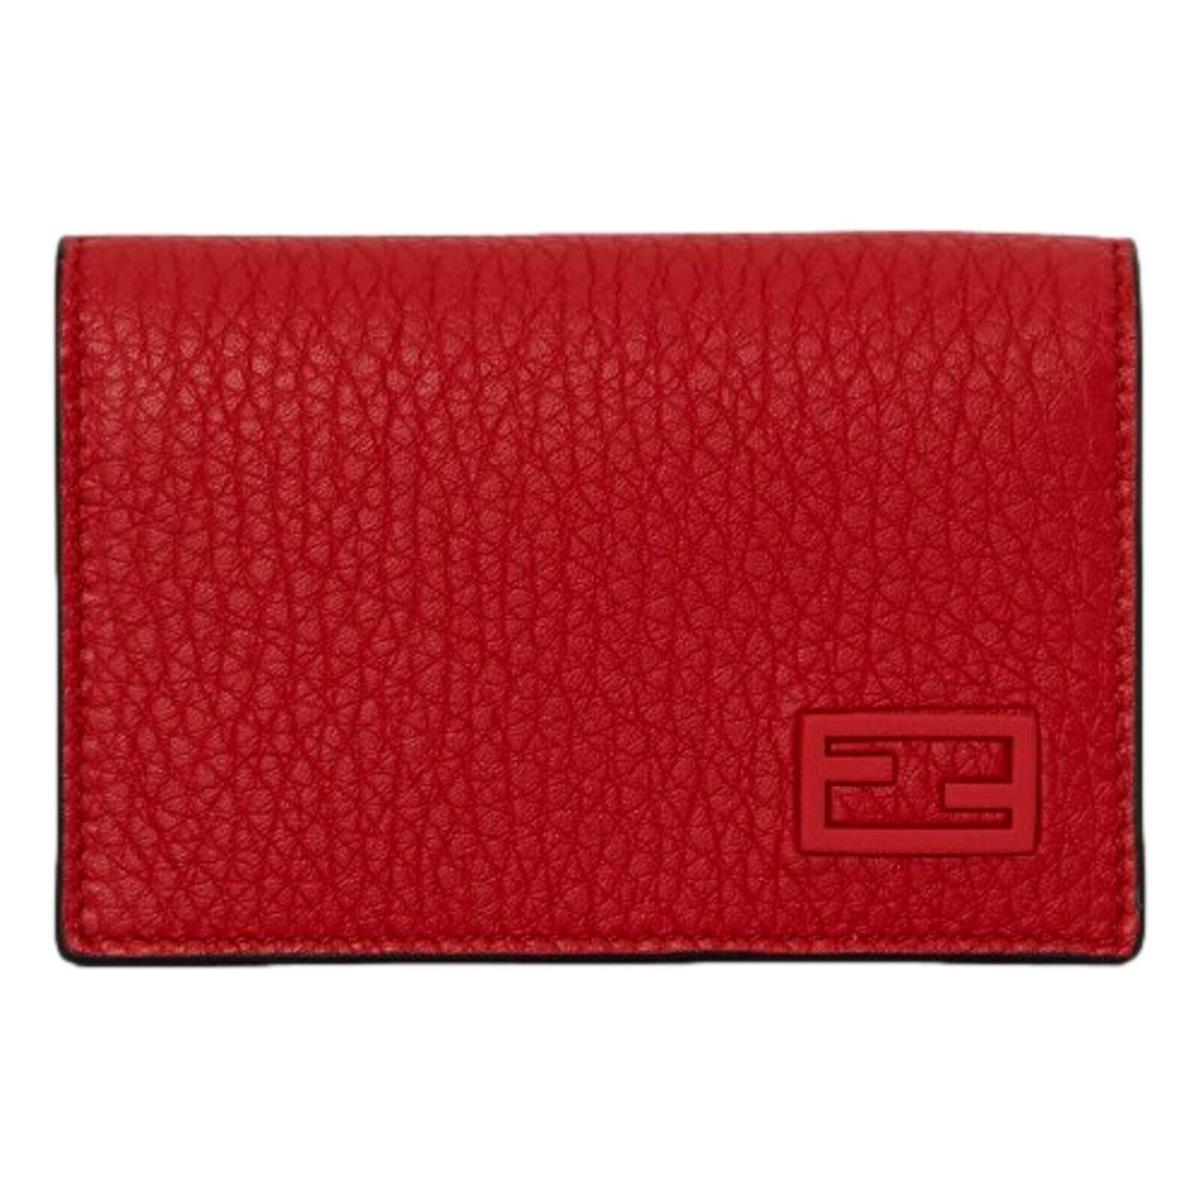 Fendi Red Grained Leather Baguette Logo Card Case Wallet 7M0222